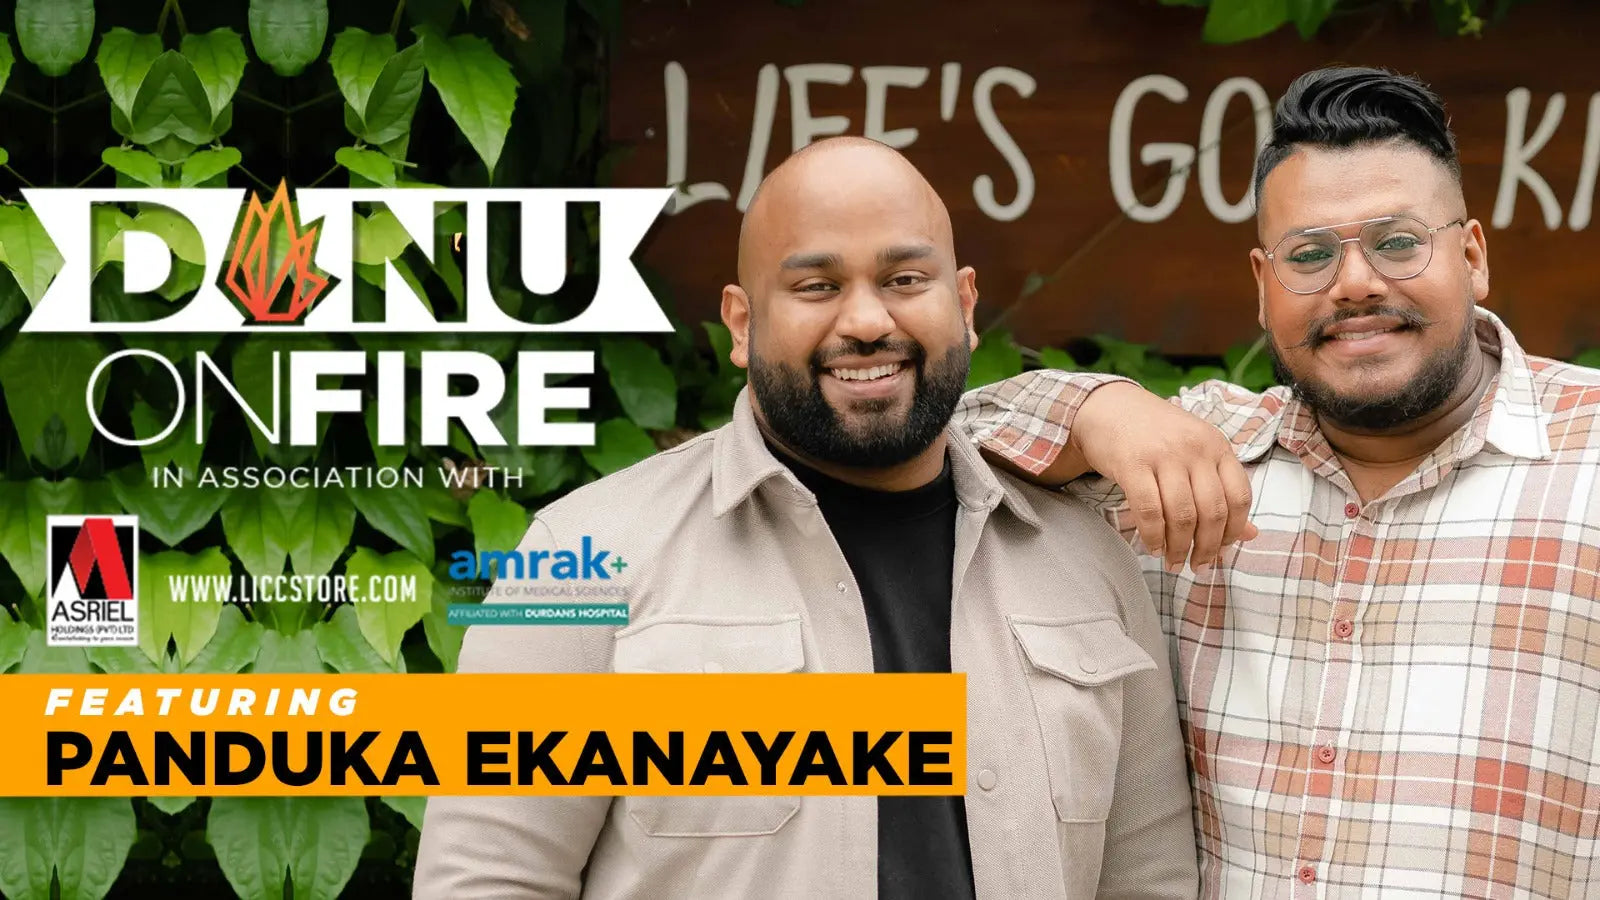 Behind the Brand: An Interview with the CEO : Panduka Ekanayake by Danu Innasithamby - LCY LONDON